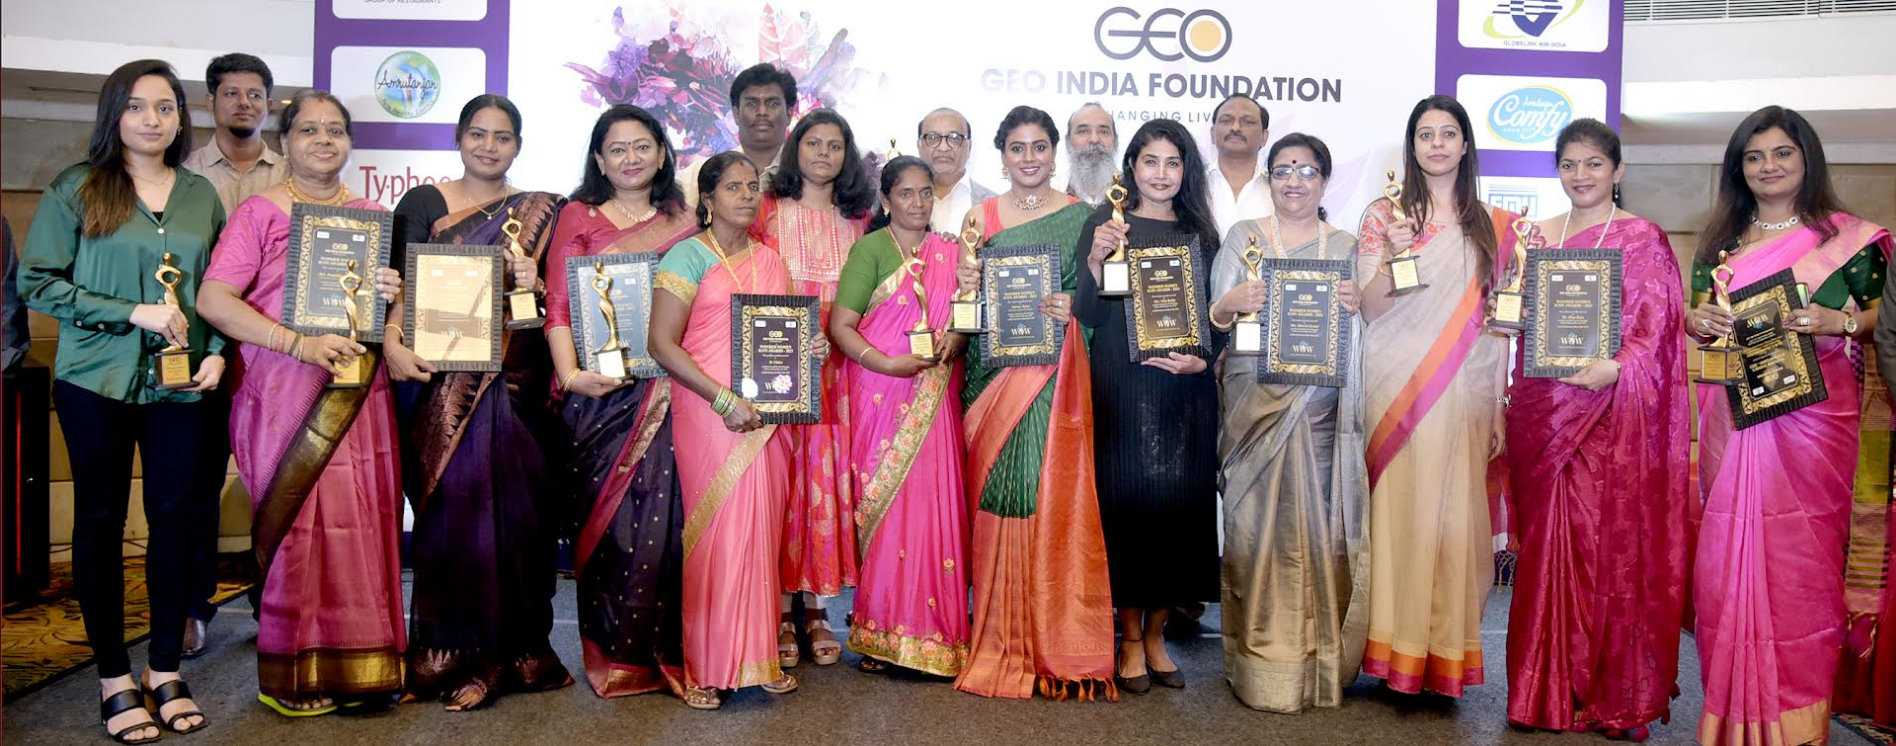 nternational Women's Day was celebrated by GEO India Foundation.